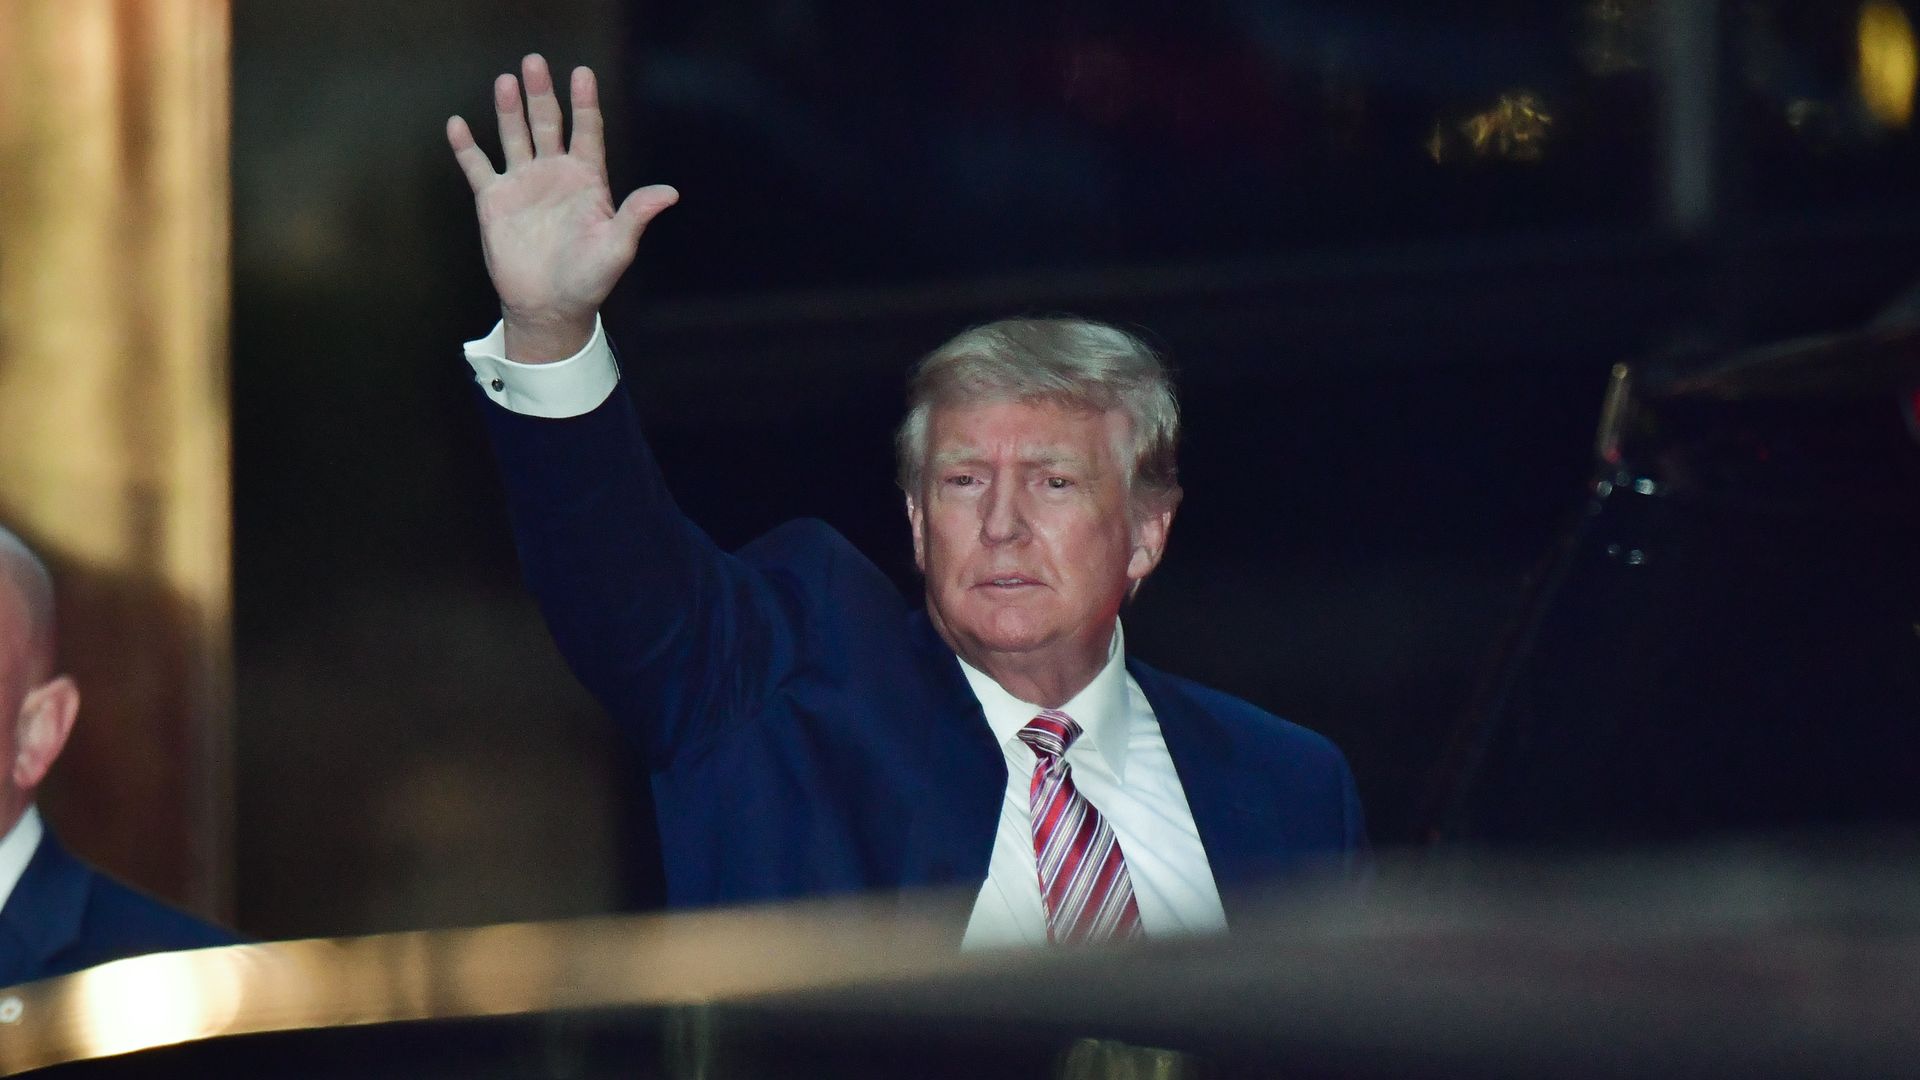 NEW YORK, NEW YORK - OCTOBER 18: Former U.S. President Donald Trump leaves Trump Tower in Manhattan on October 18, 2021 in New York City. 